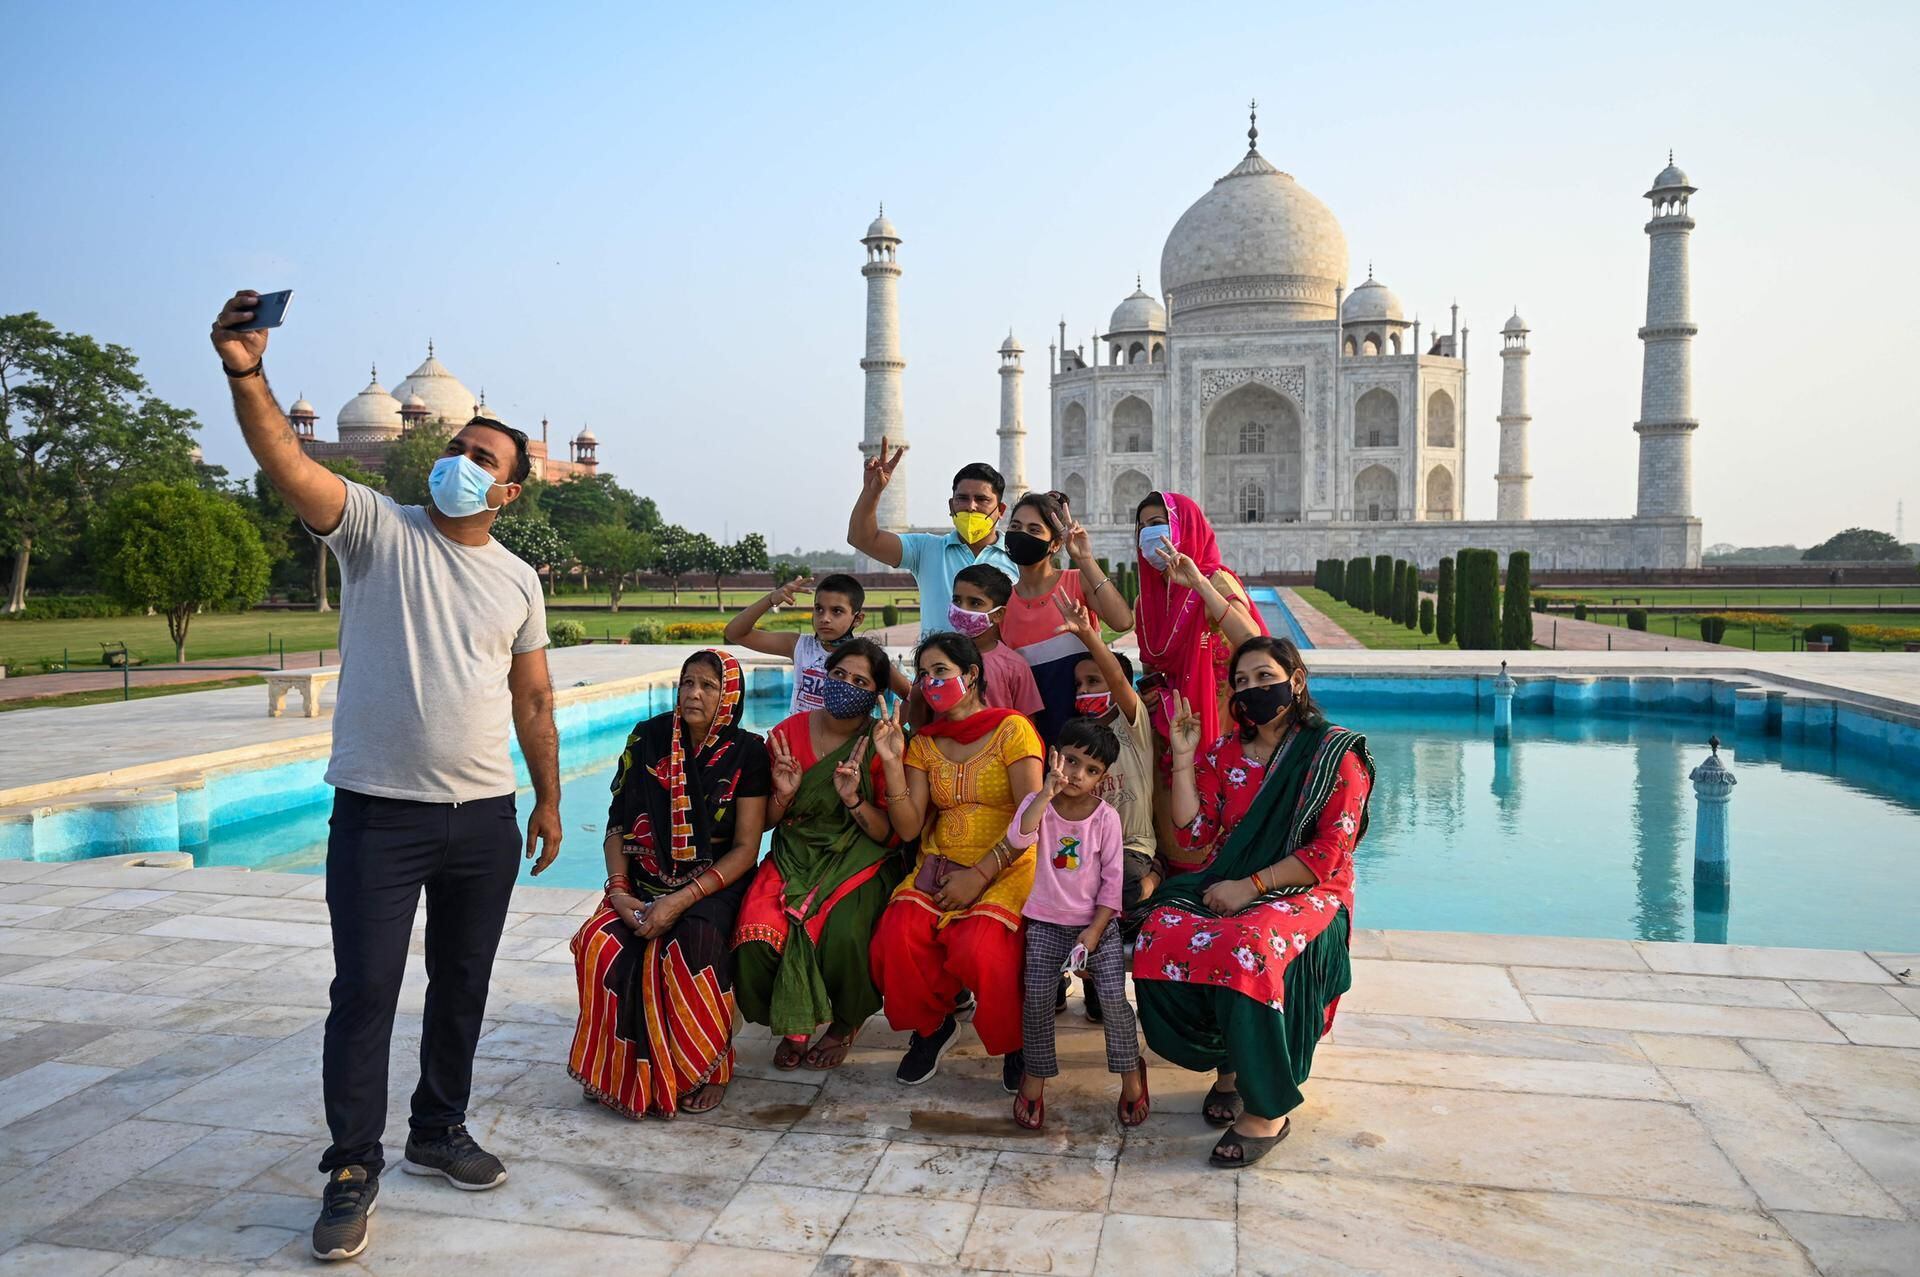 Tourists flock to India's Taj Mahal after Covid-19 closure